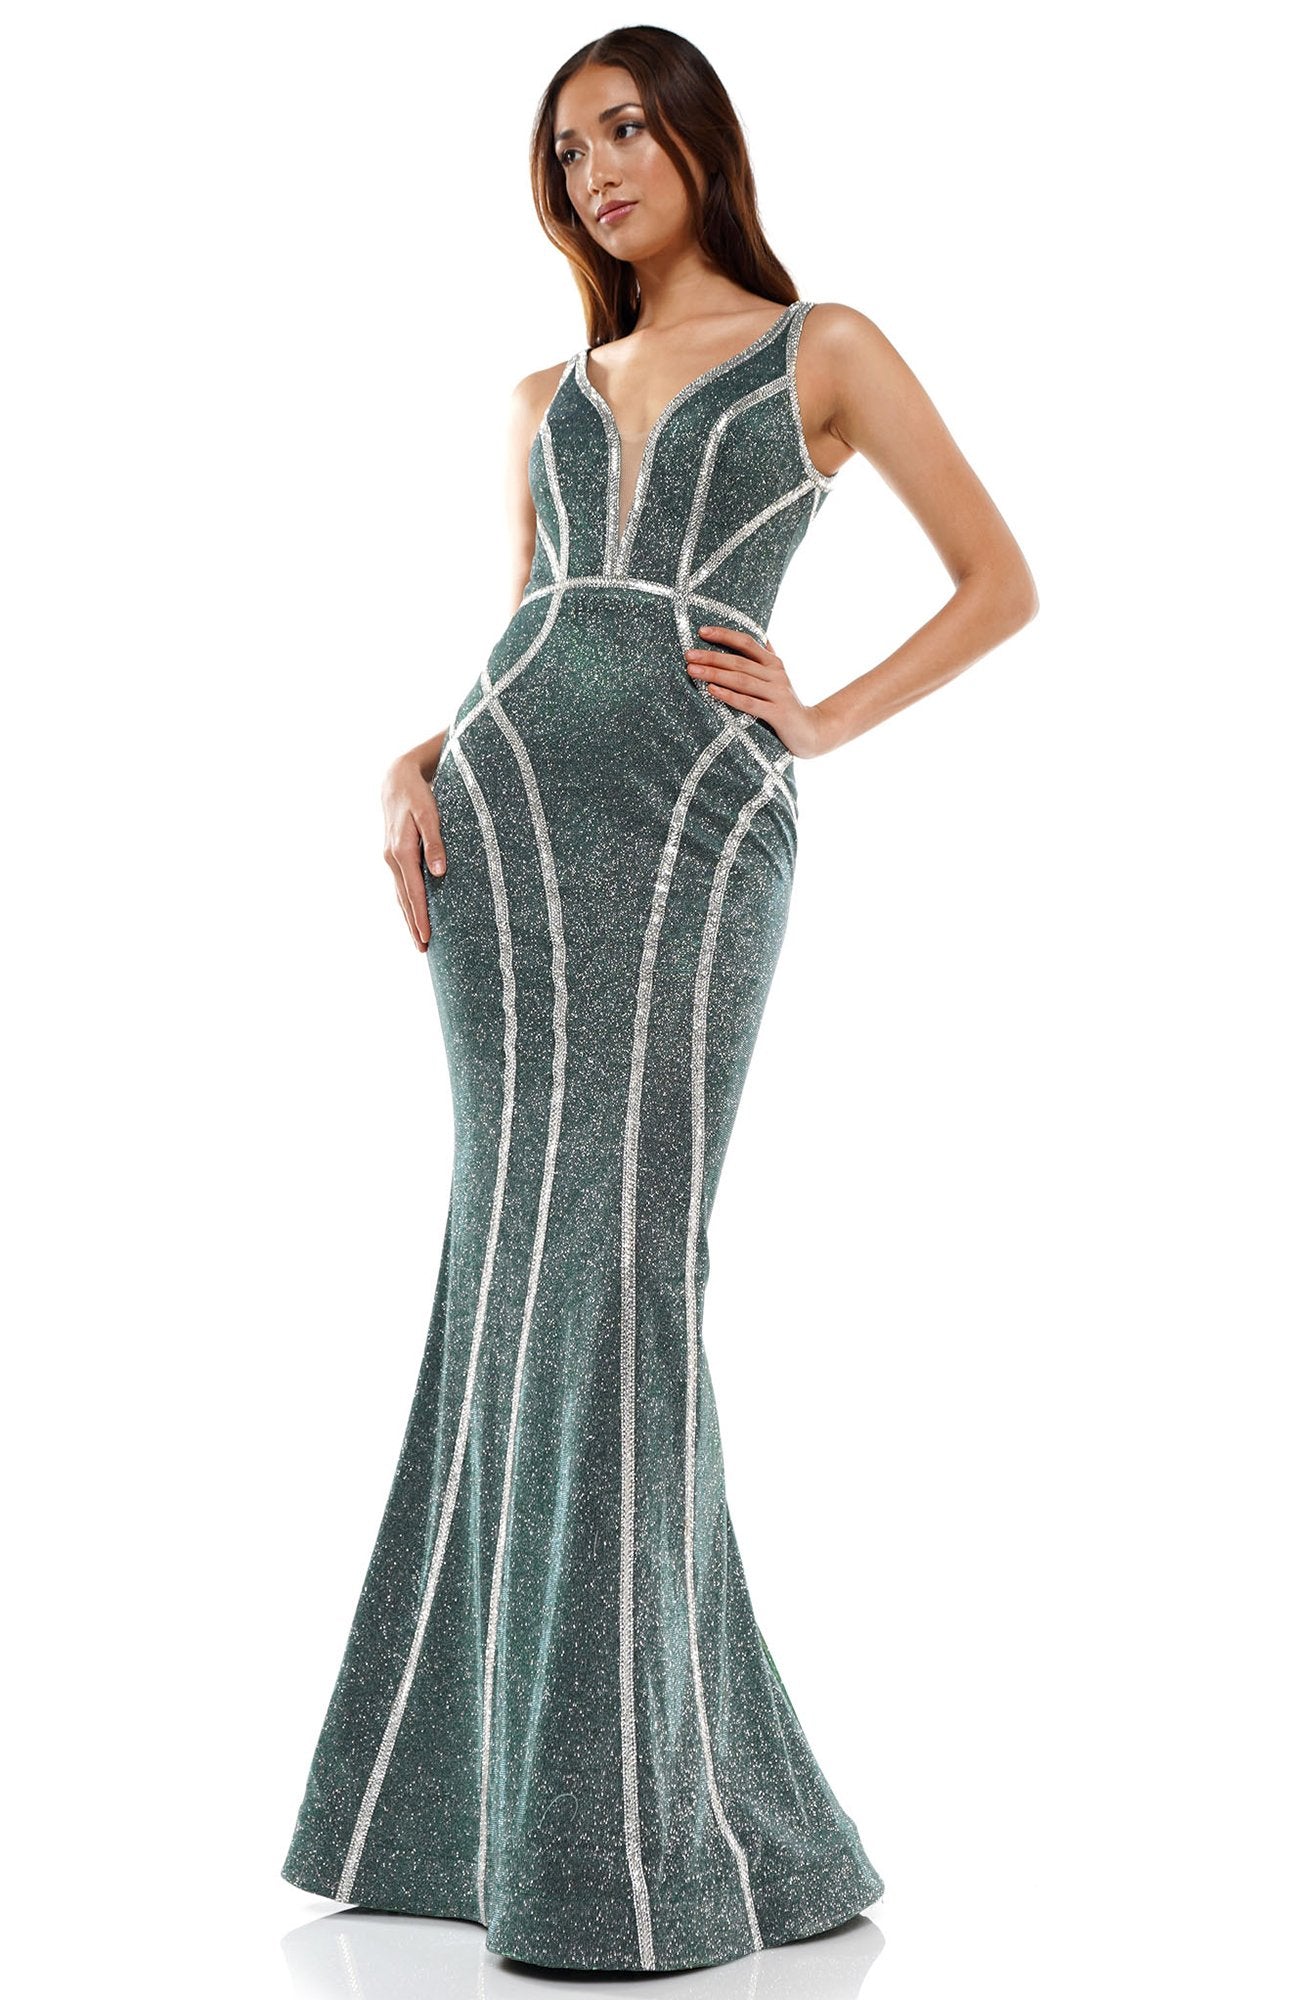 Glow Dress - G905 Geometric Beaded Stripes Glitter Jersey Evening Gown In Green